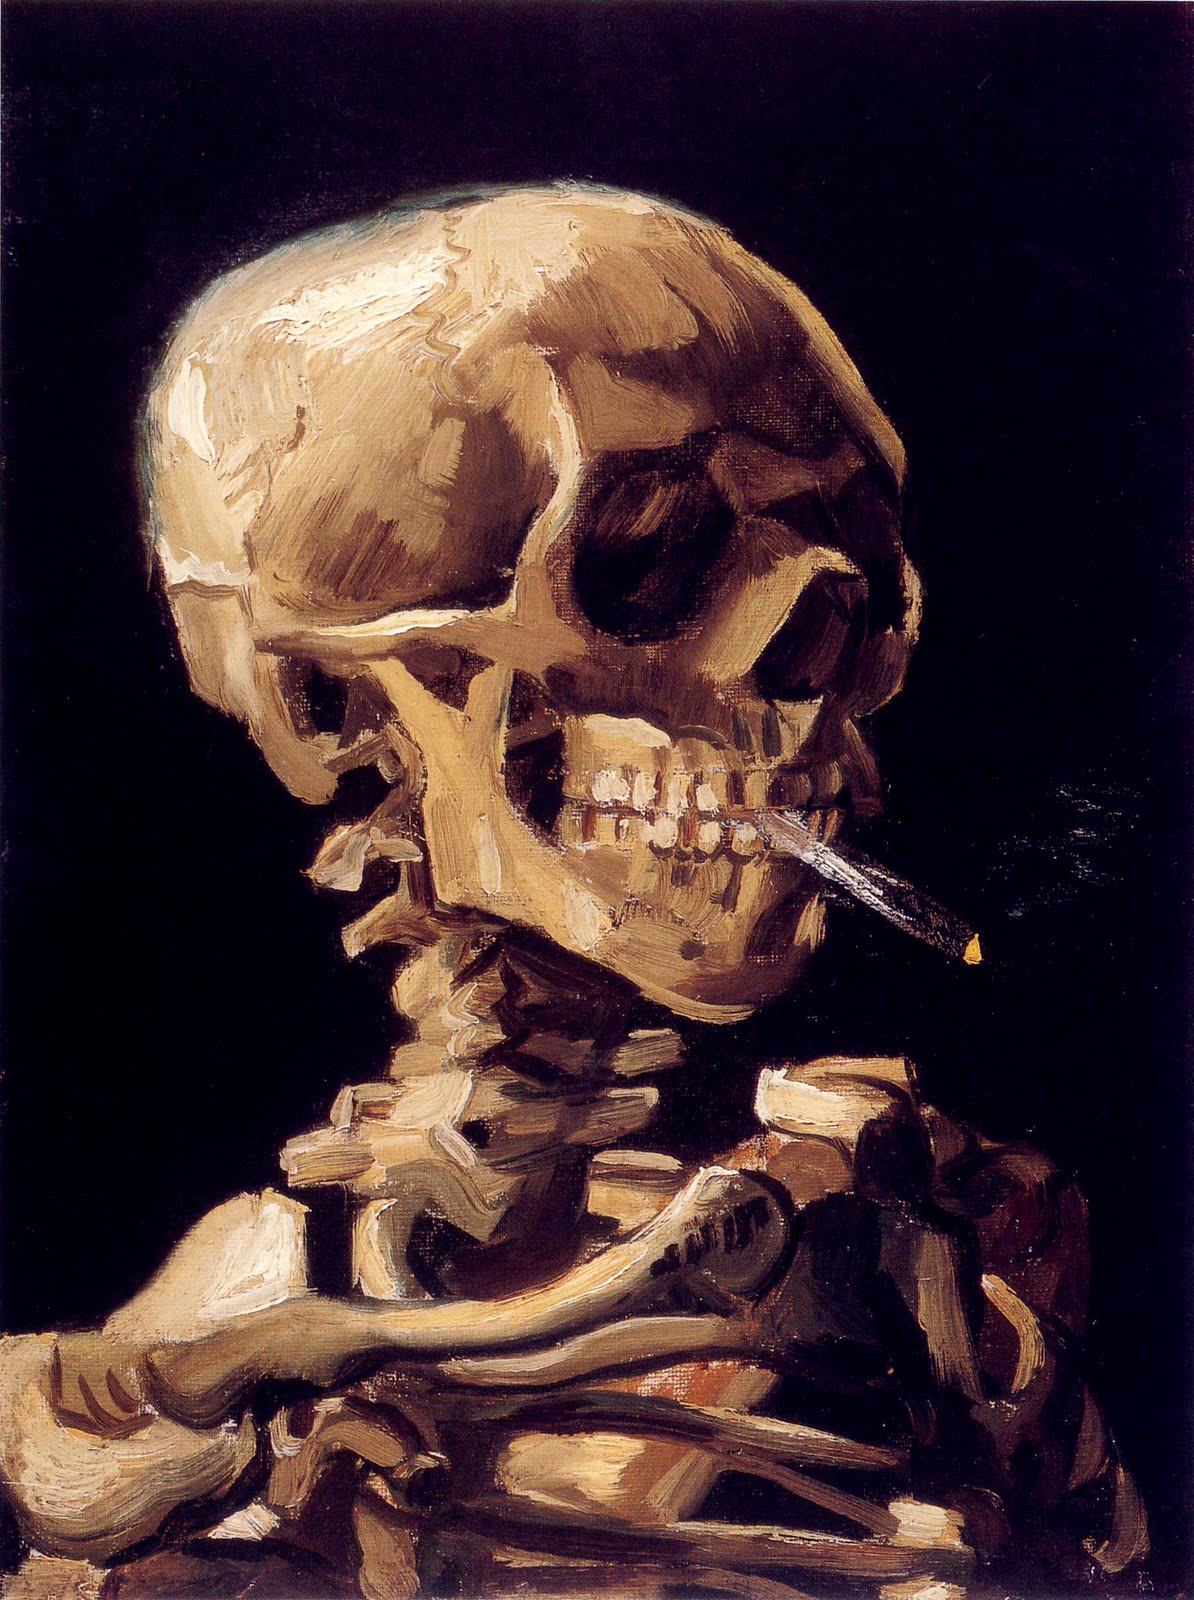 https://blogger.googleusercontent.com/img/b/R29vZ2xl/AVvXsEgORfCFaQrki_0Uk-BHEJJzcJCy1RtT4XxIjCi8nJd5ZjtfqxN1tEqCD6AhBfeHcKsNoc9k8aG9QS6P6Ap1df7mJwvkqqEM0ztbRJV4UKFmaxwZpAhXxvf5e854aFEWM6deQZieF2igpjg/s1600/Skull+with+a+burning+cigarette.jpg